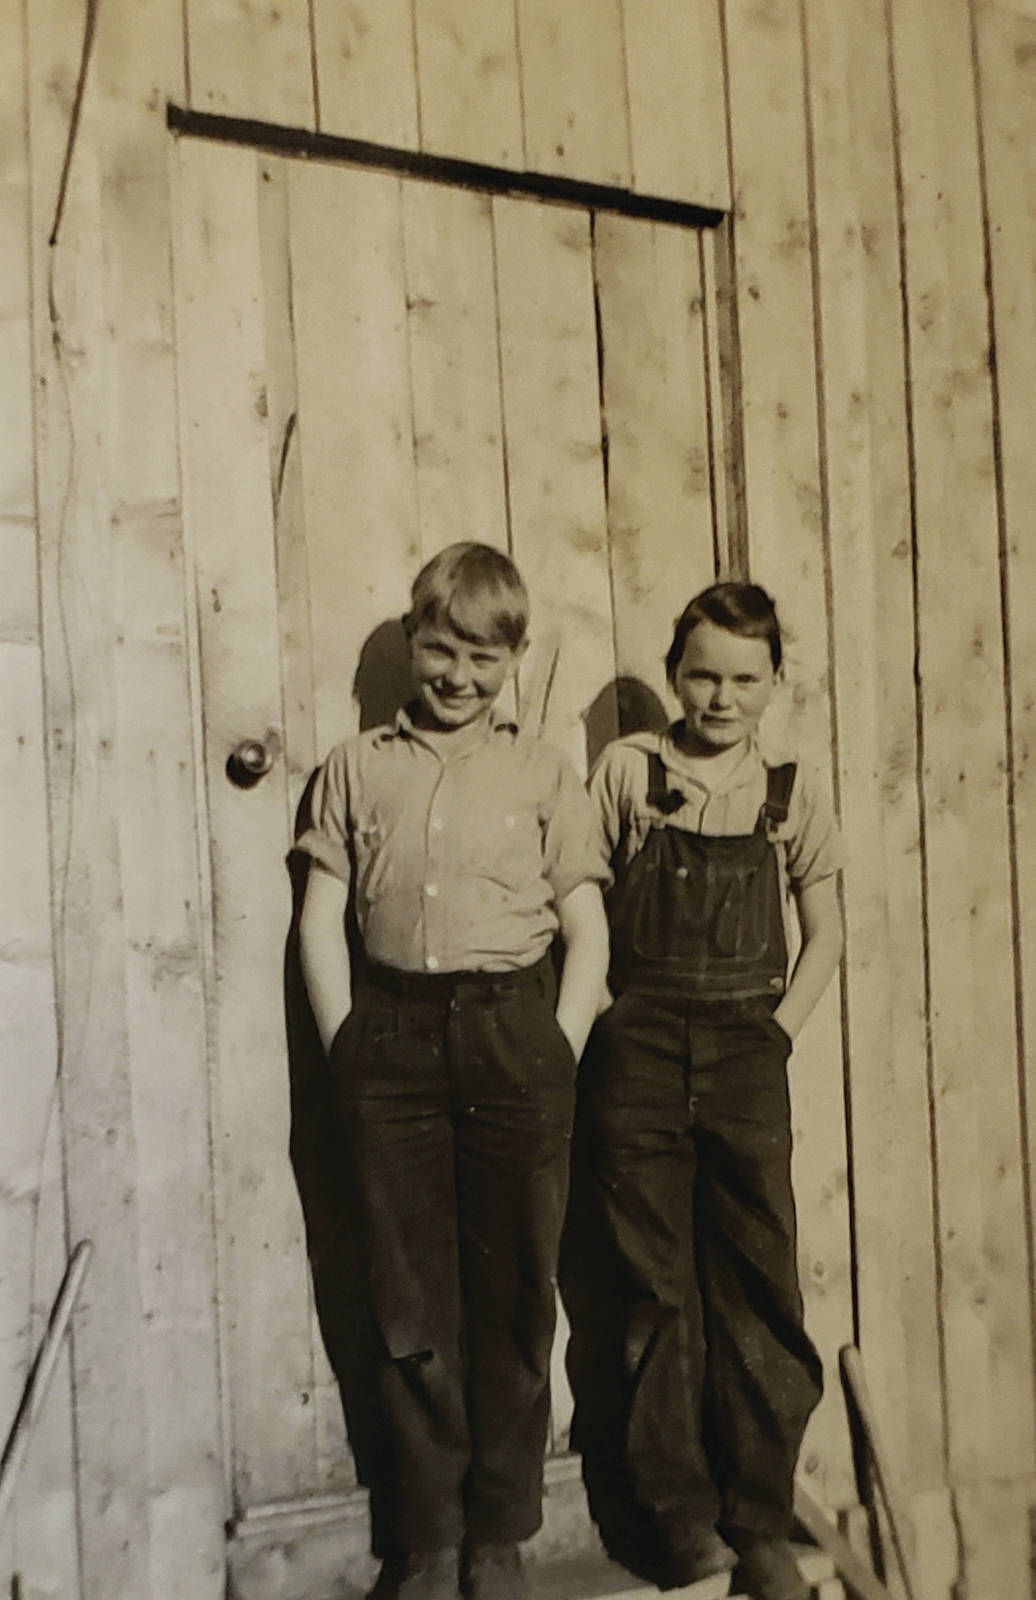 Robert and Laura Lofgren in the 1940s at their Diamond Ridge homestead near Homer, Alaska. (Photo courtesy of the Lofgren family)